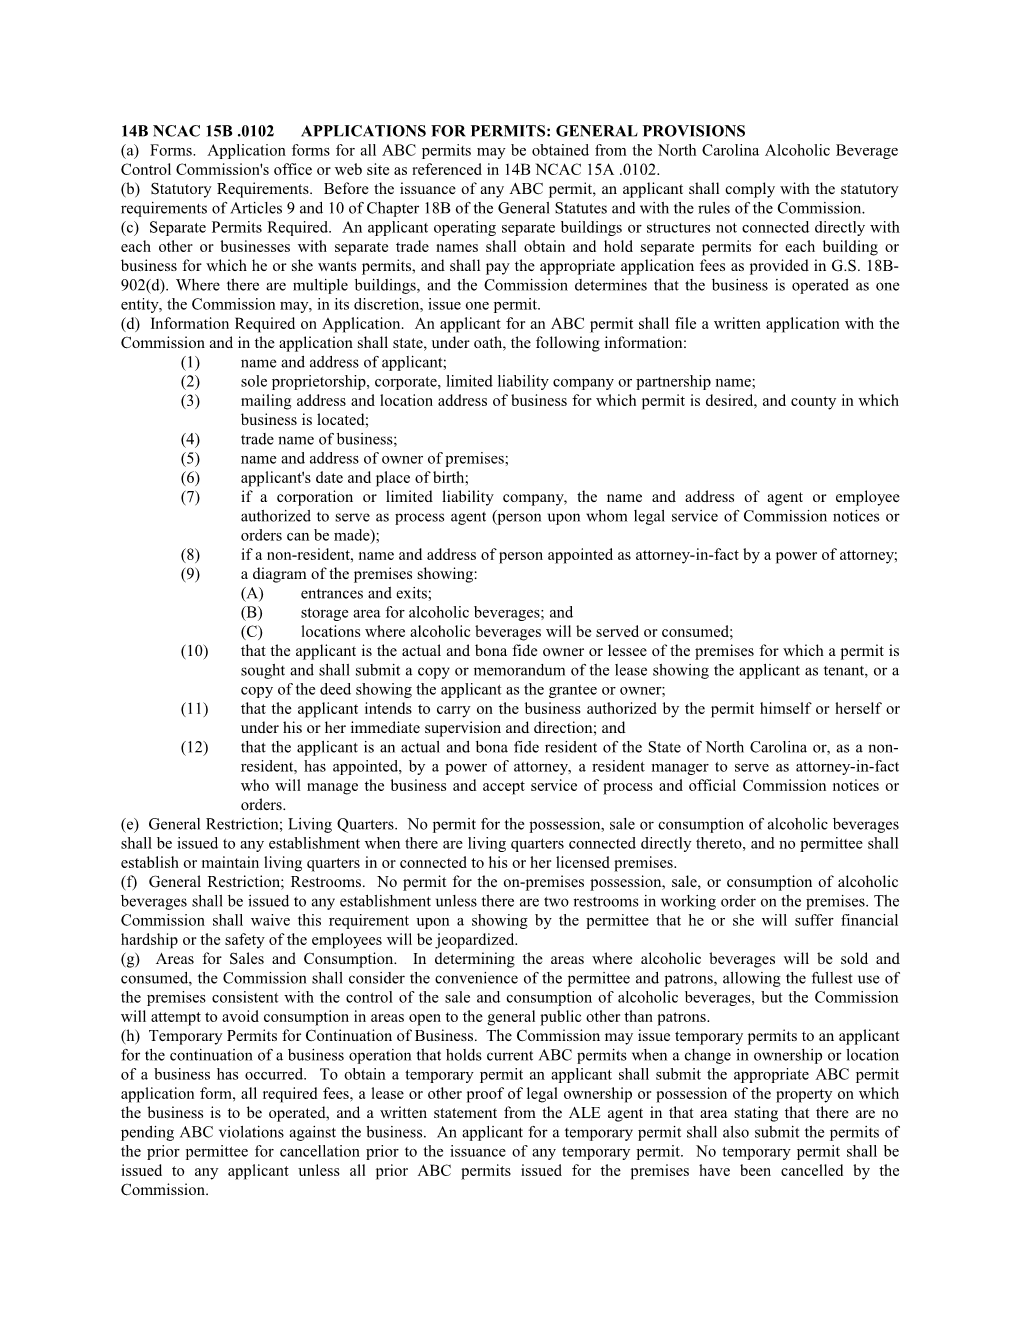 14B Ncac 15B .0102 Applications for Permits: General Provisions